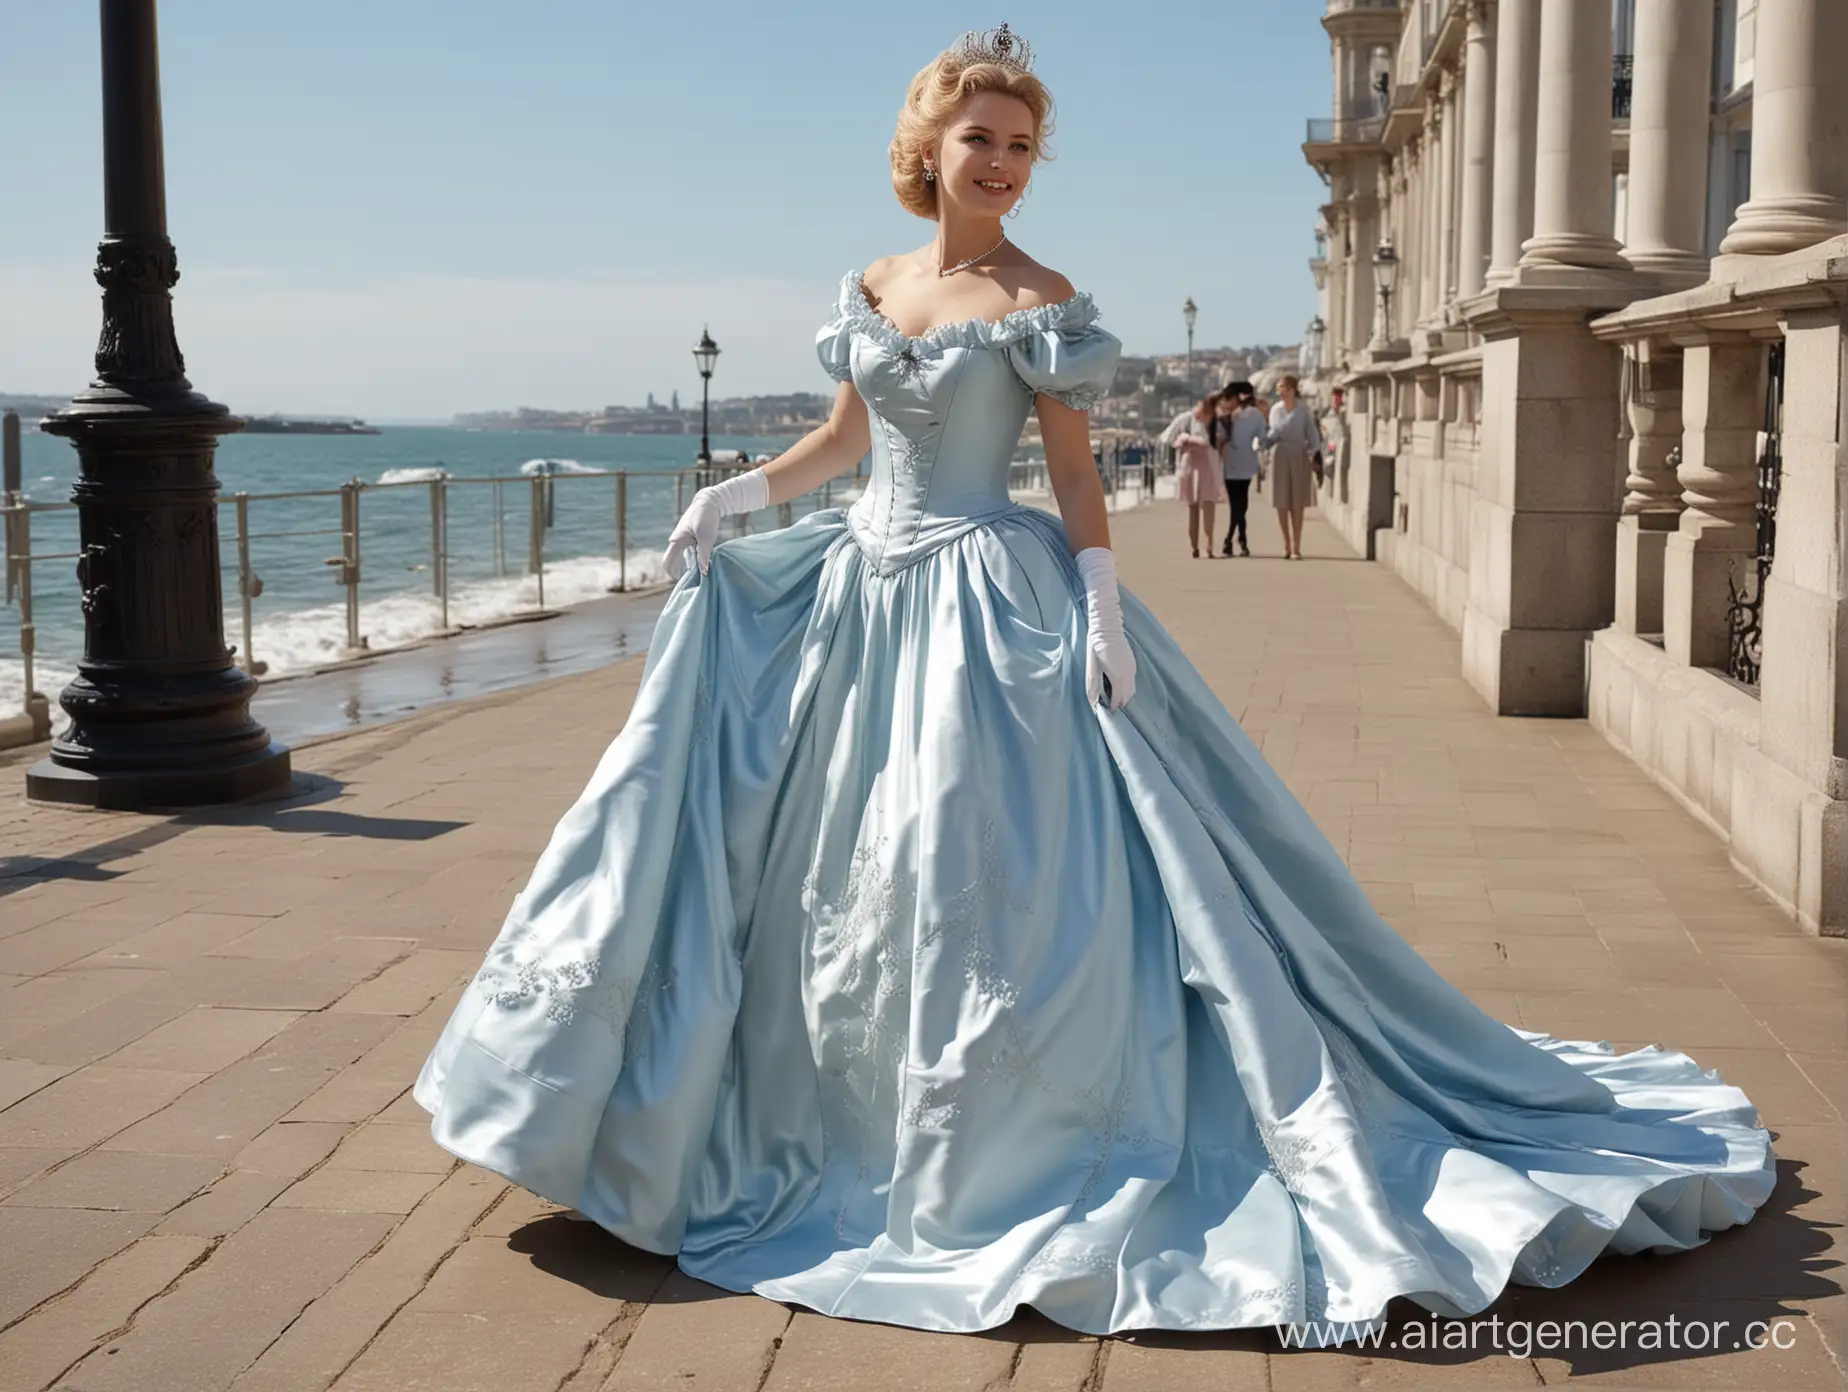 Elegant-Queen-in-Satin-Blue-Dress-by-the-Seaside